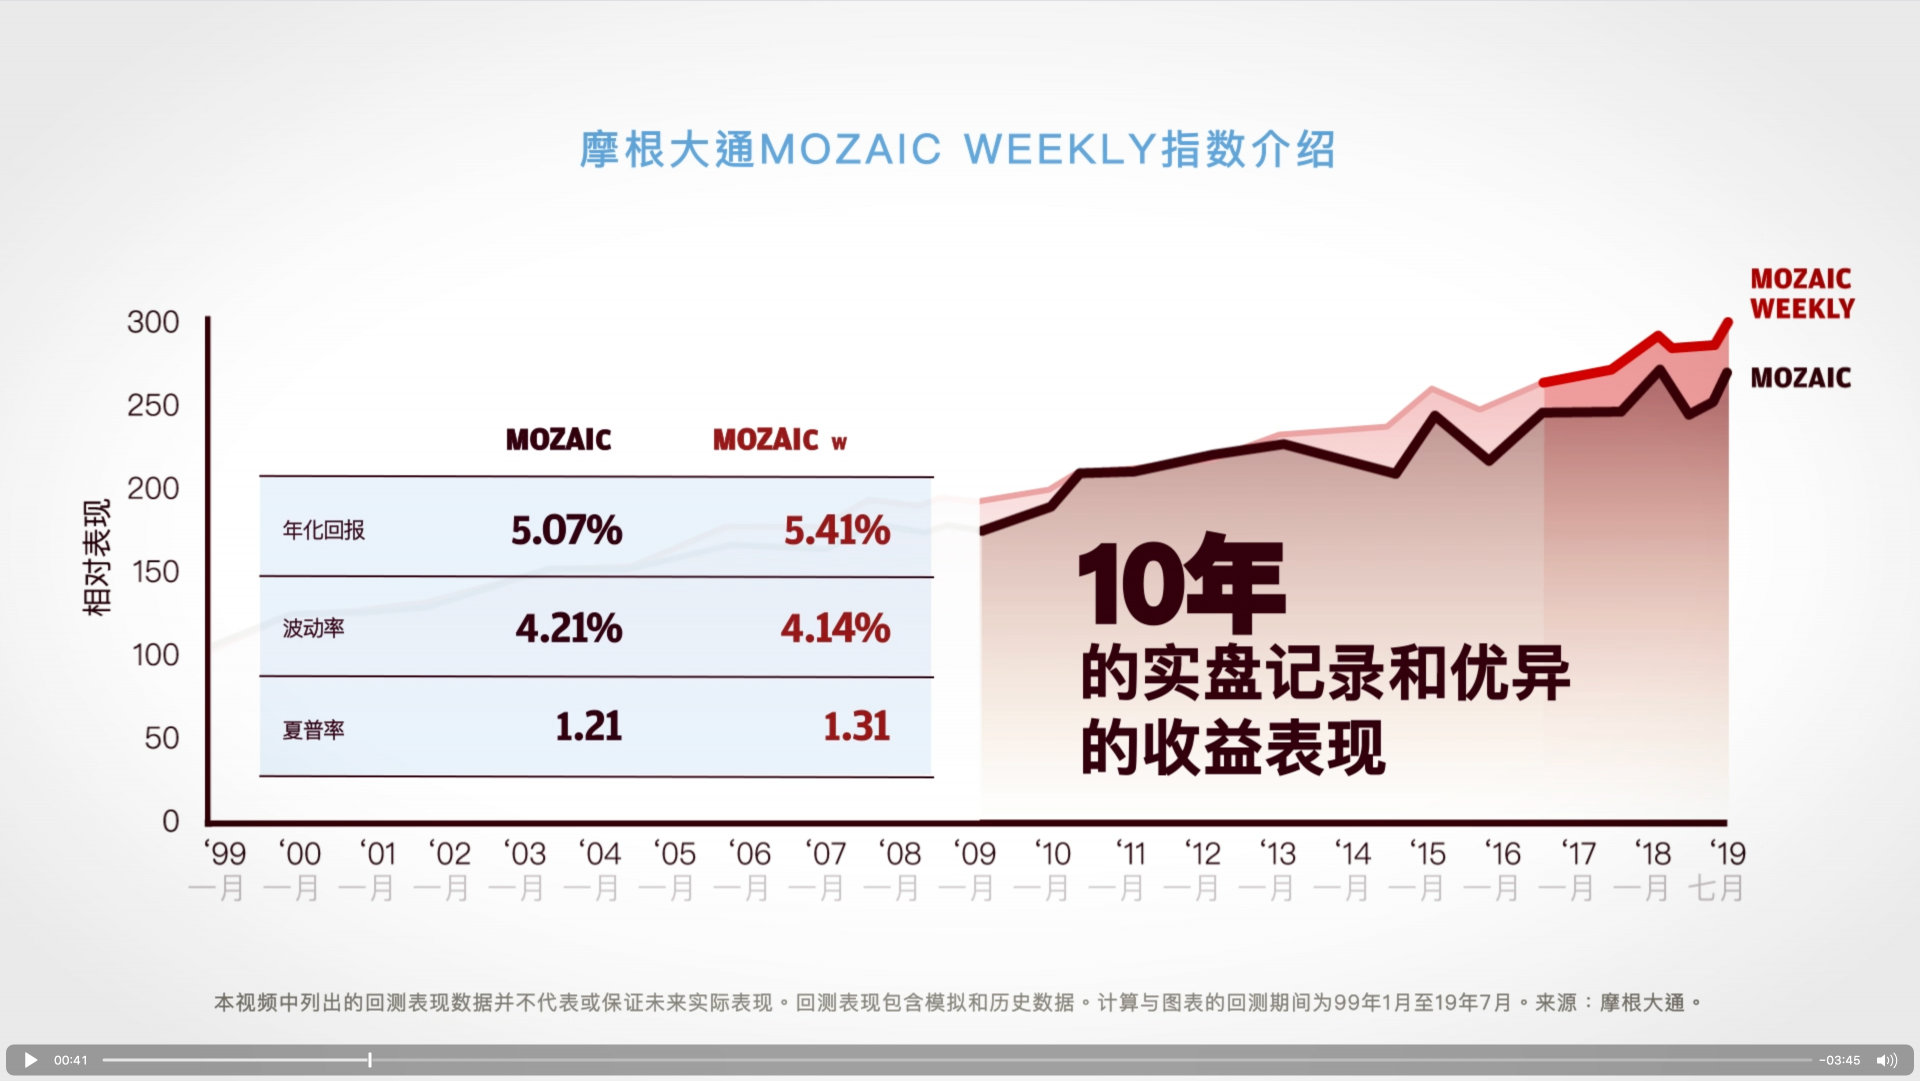 Mozaic Weekly JP Morgan in Chinese